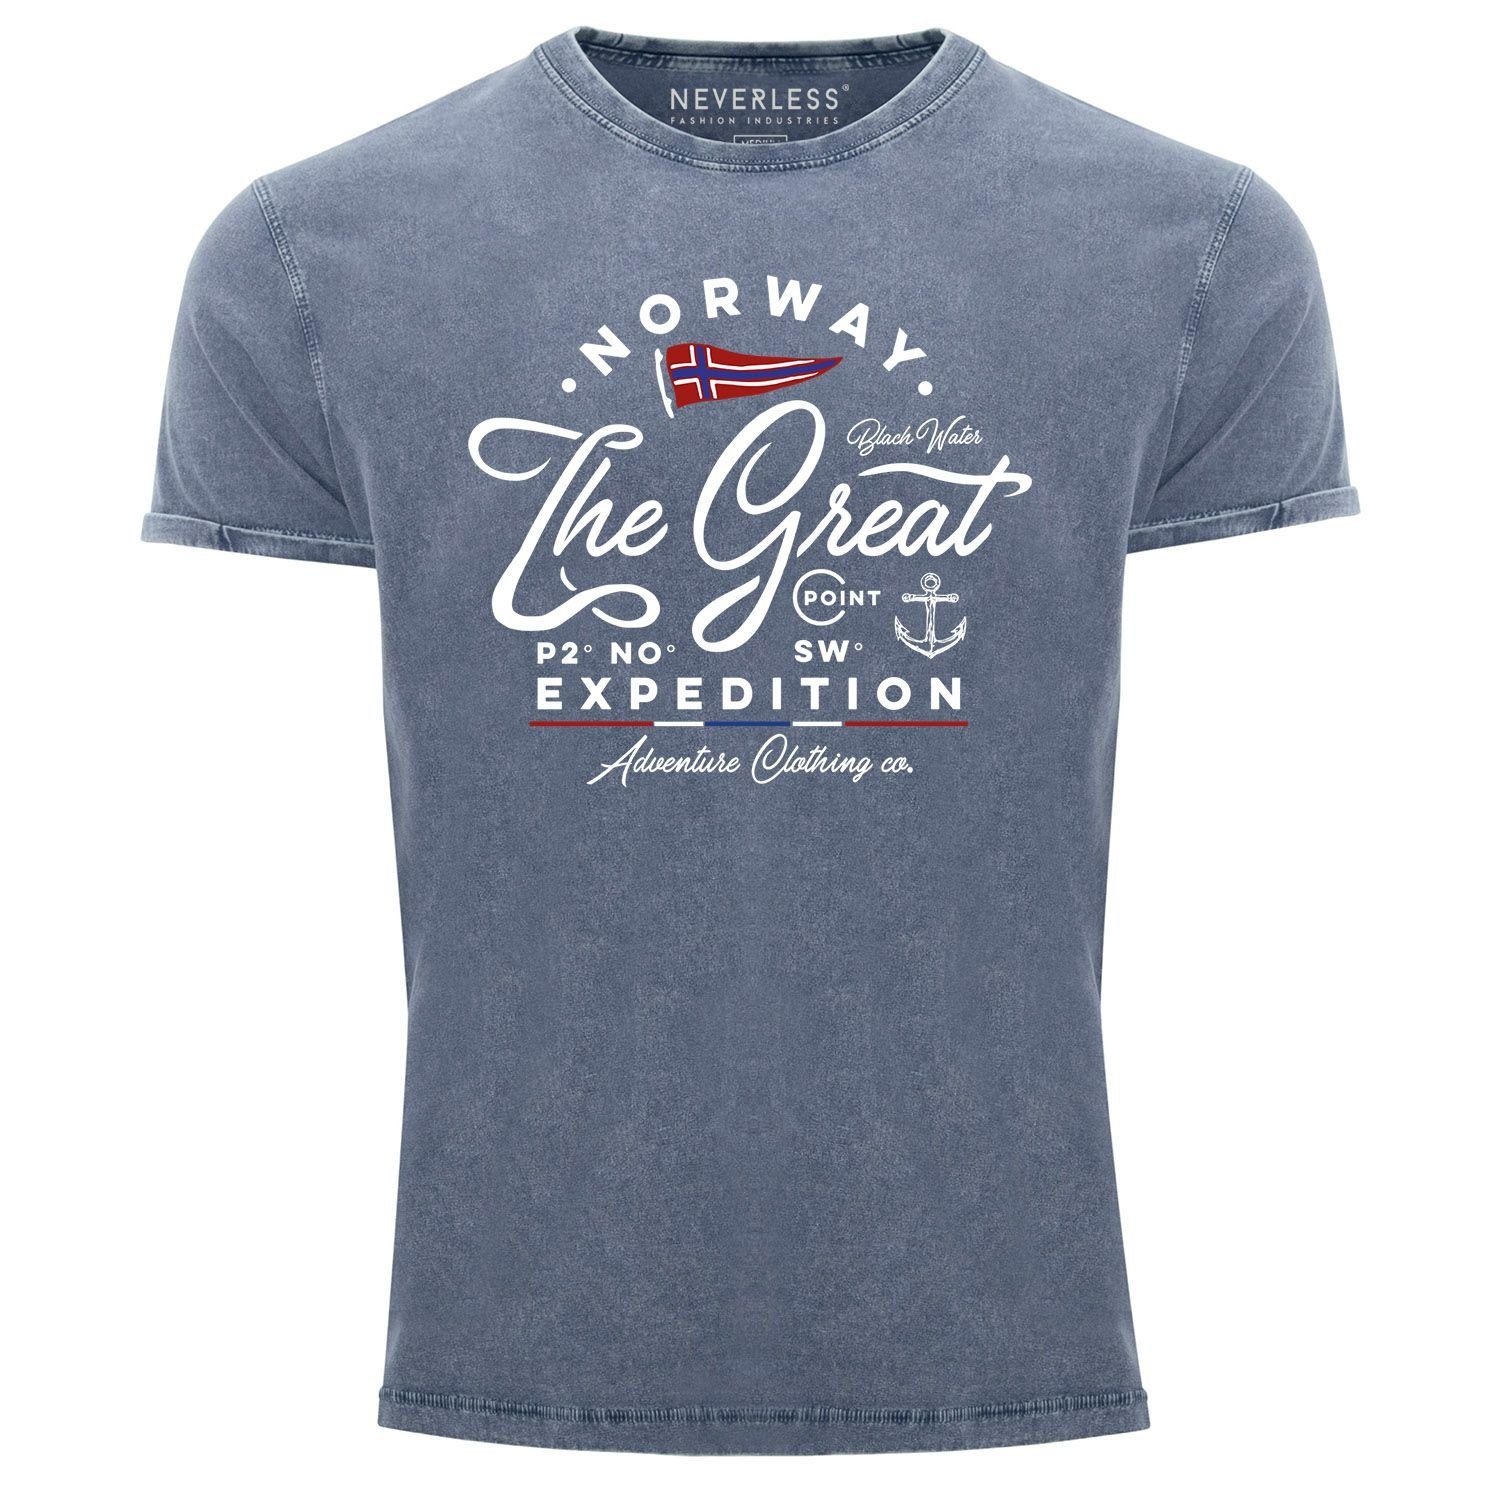 Neverless Print-Shirt Herren Vintage Shirt Norwegen The Great Expedition Outdoor Adventure Printshirt T-Shirt Aufdruck Used Look Neverless® mit Print blau